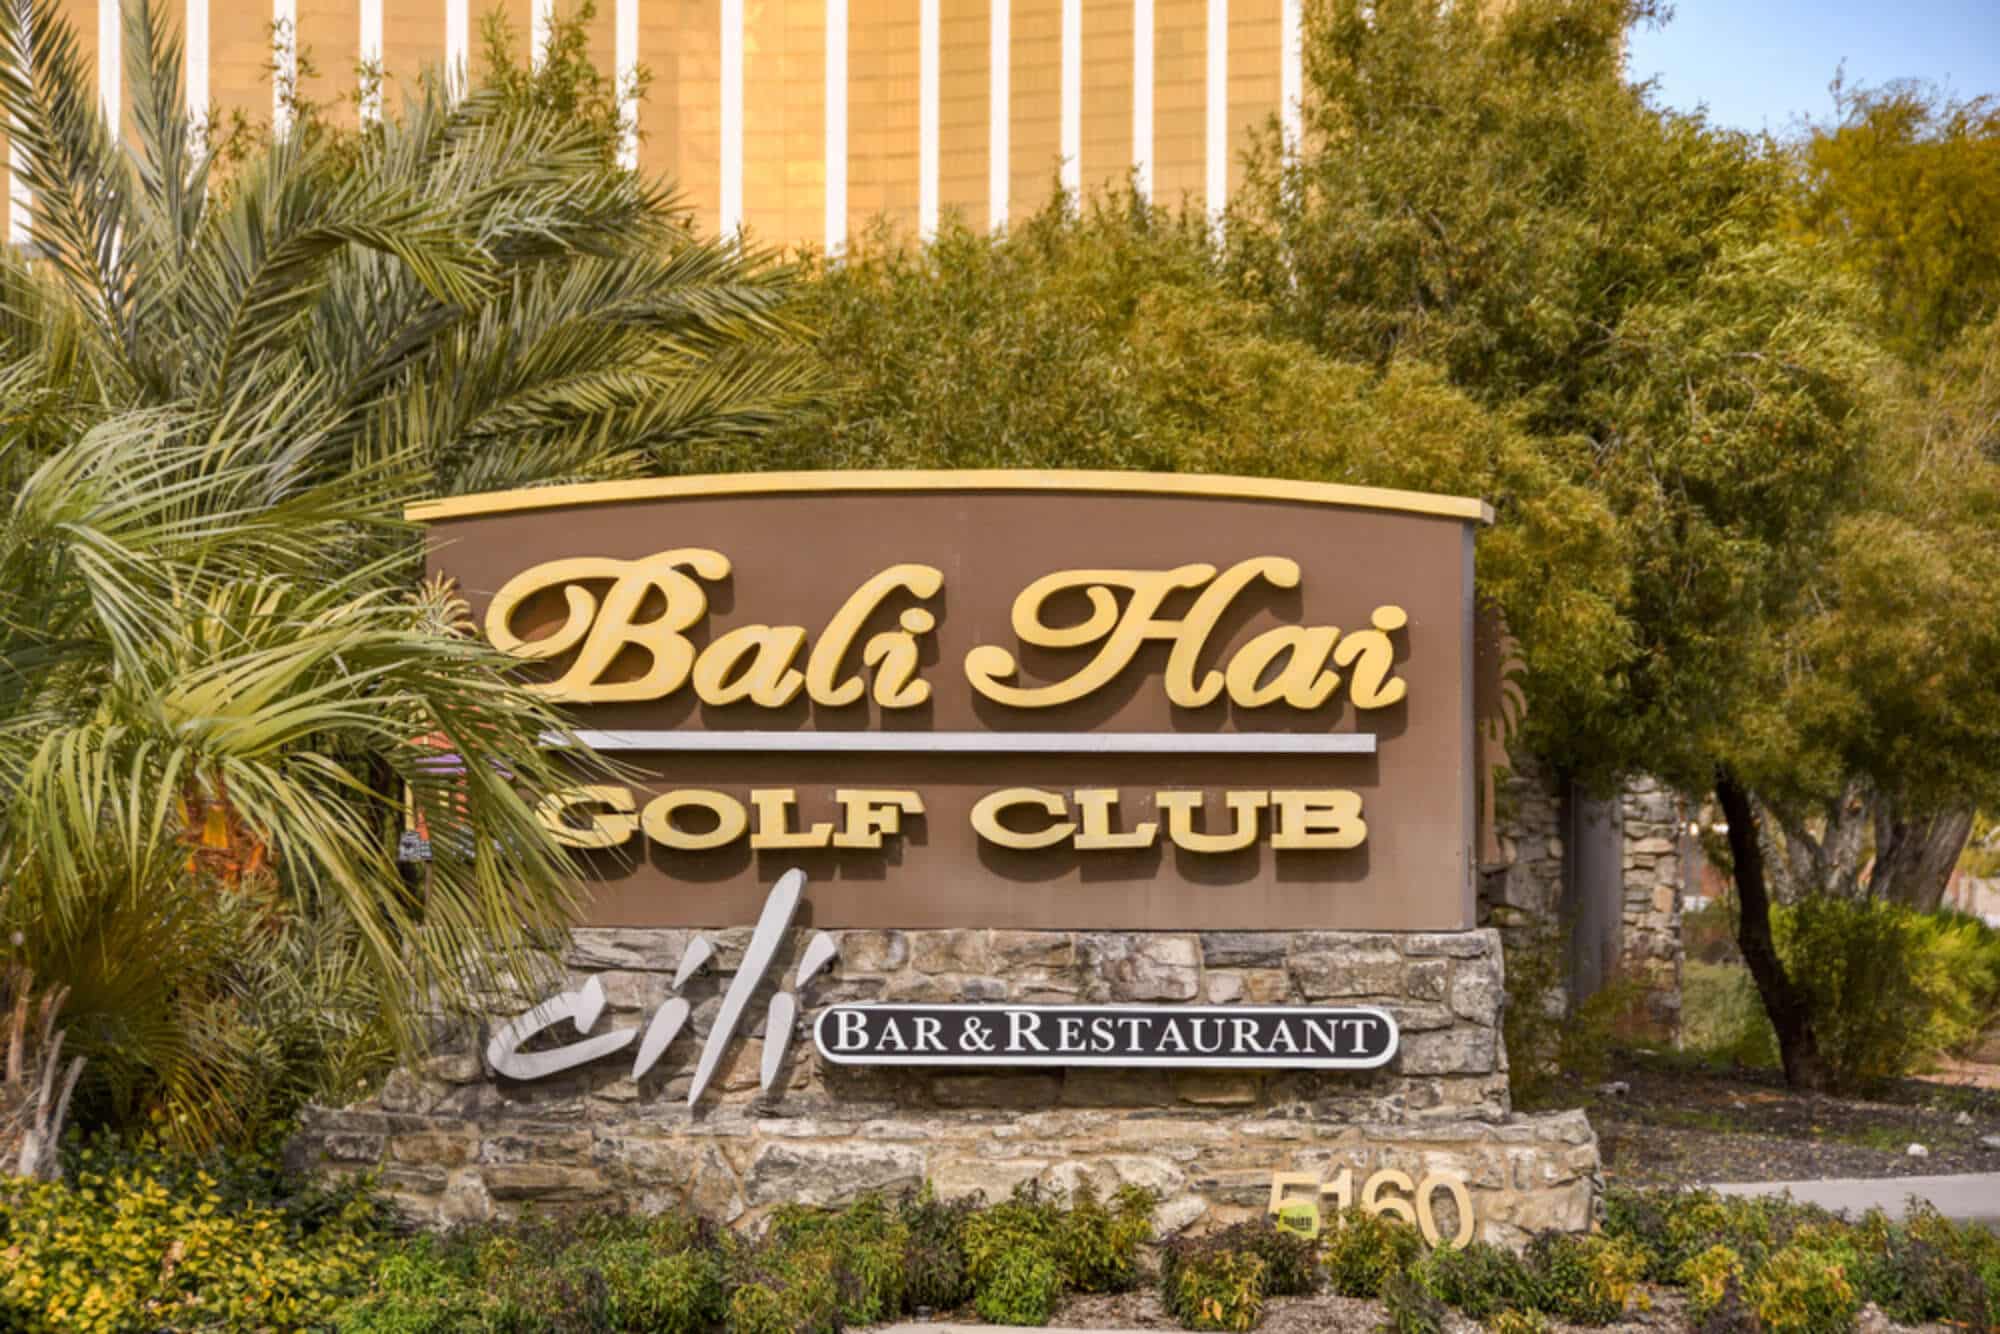 Image of Bali Hai golf club sign